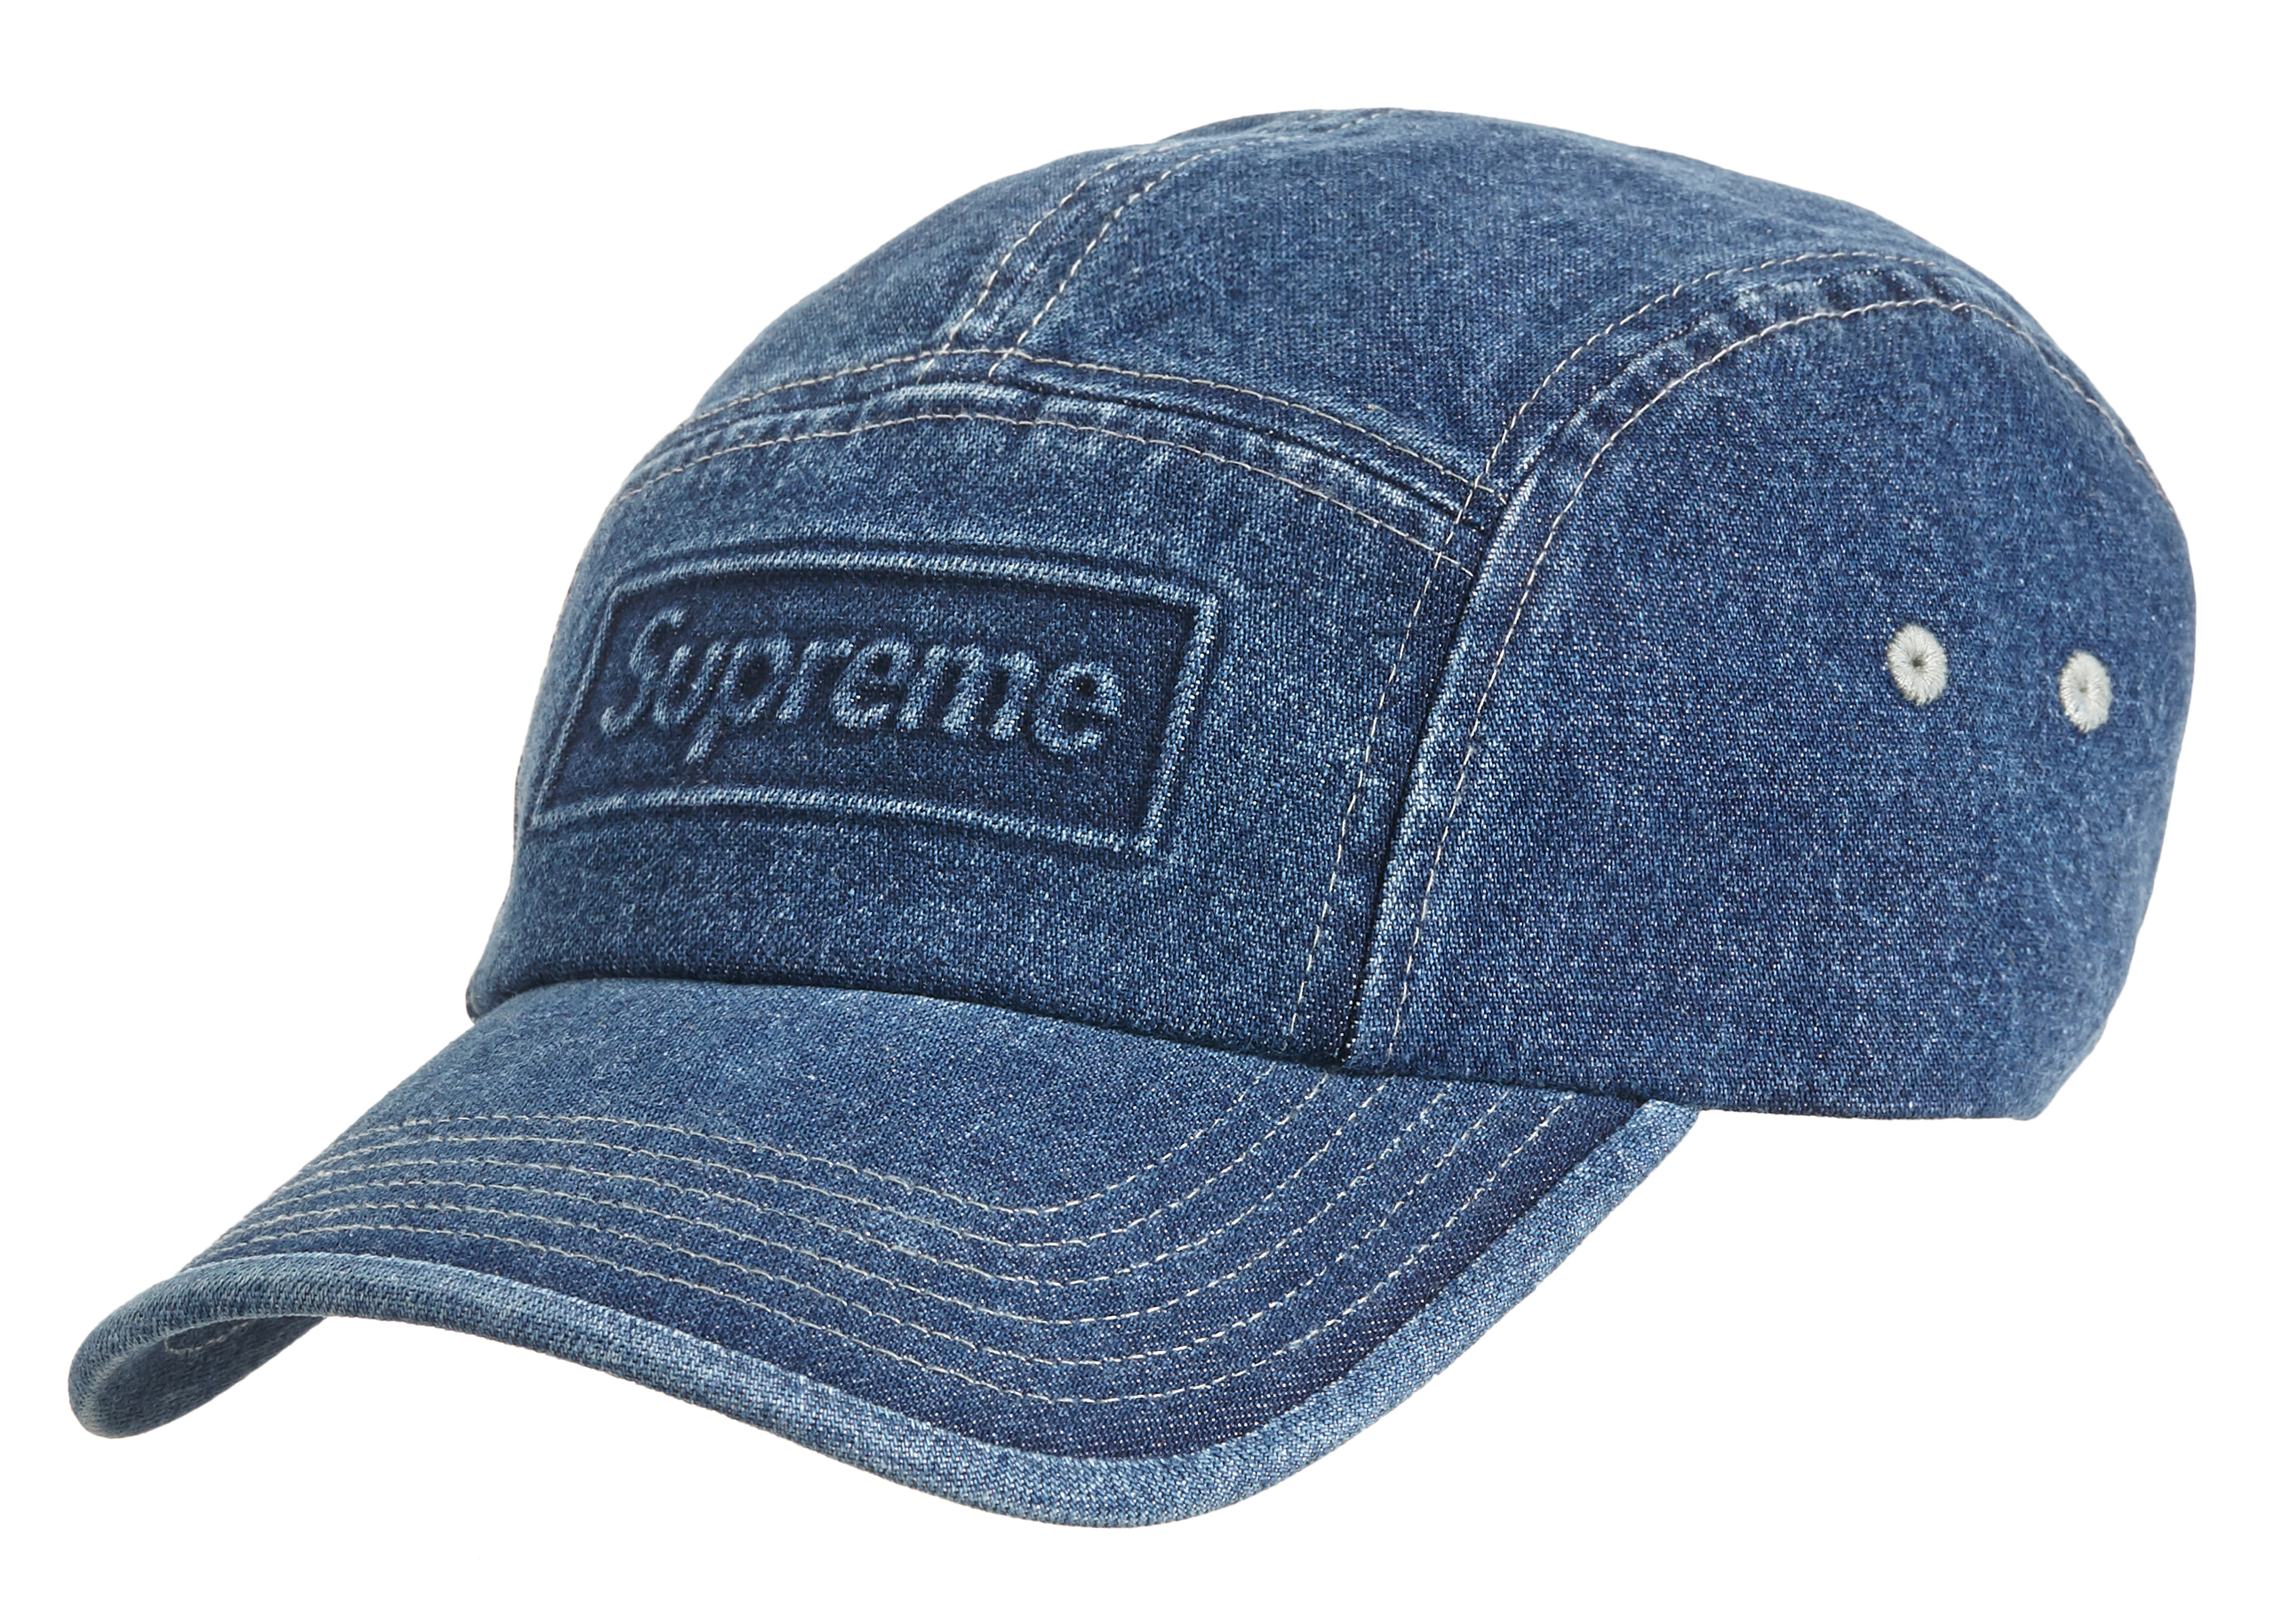 Supreme Hats Stockx Shop, 55% OFF | www.enaco.com.pe